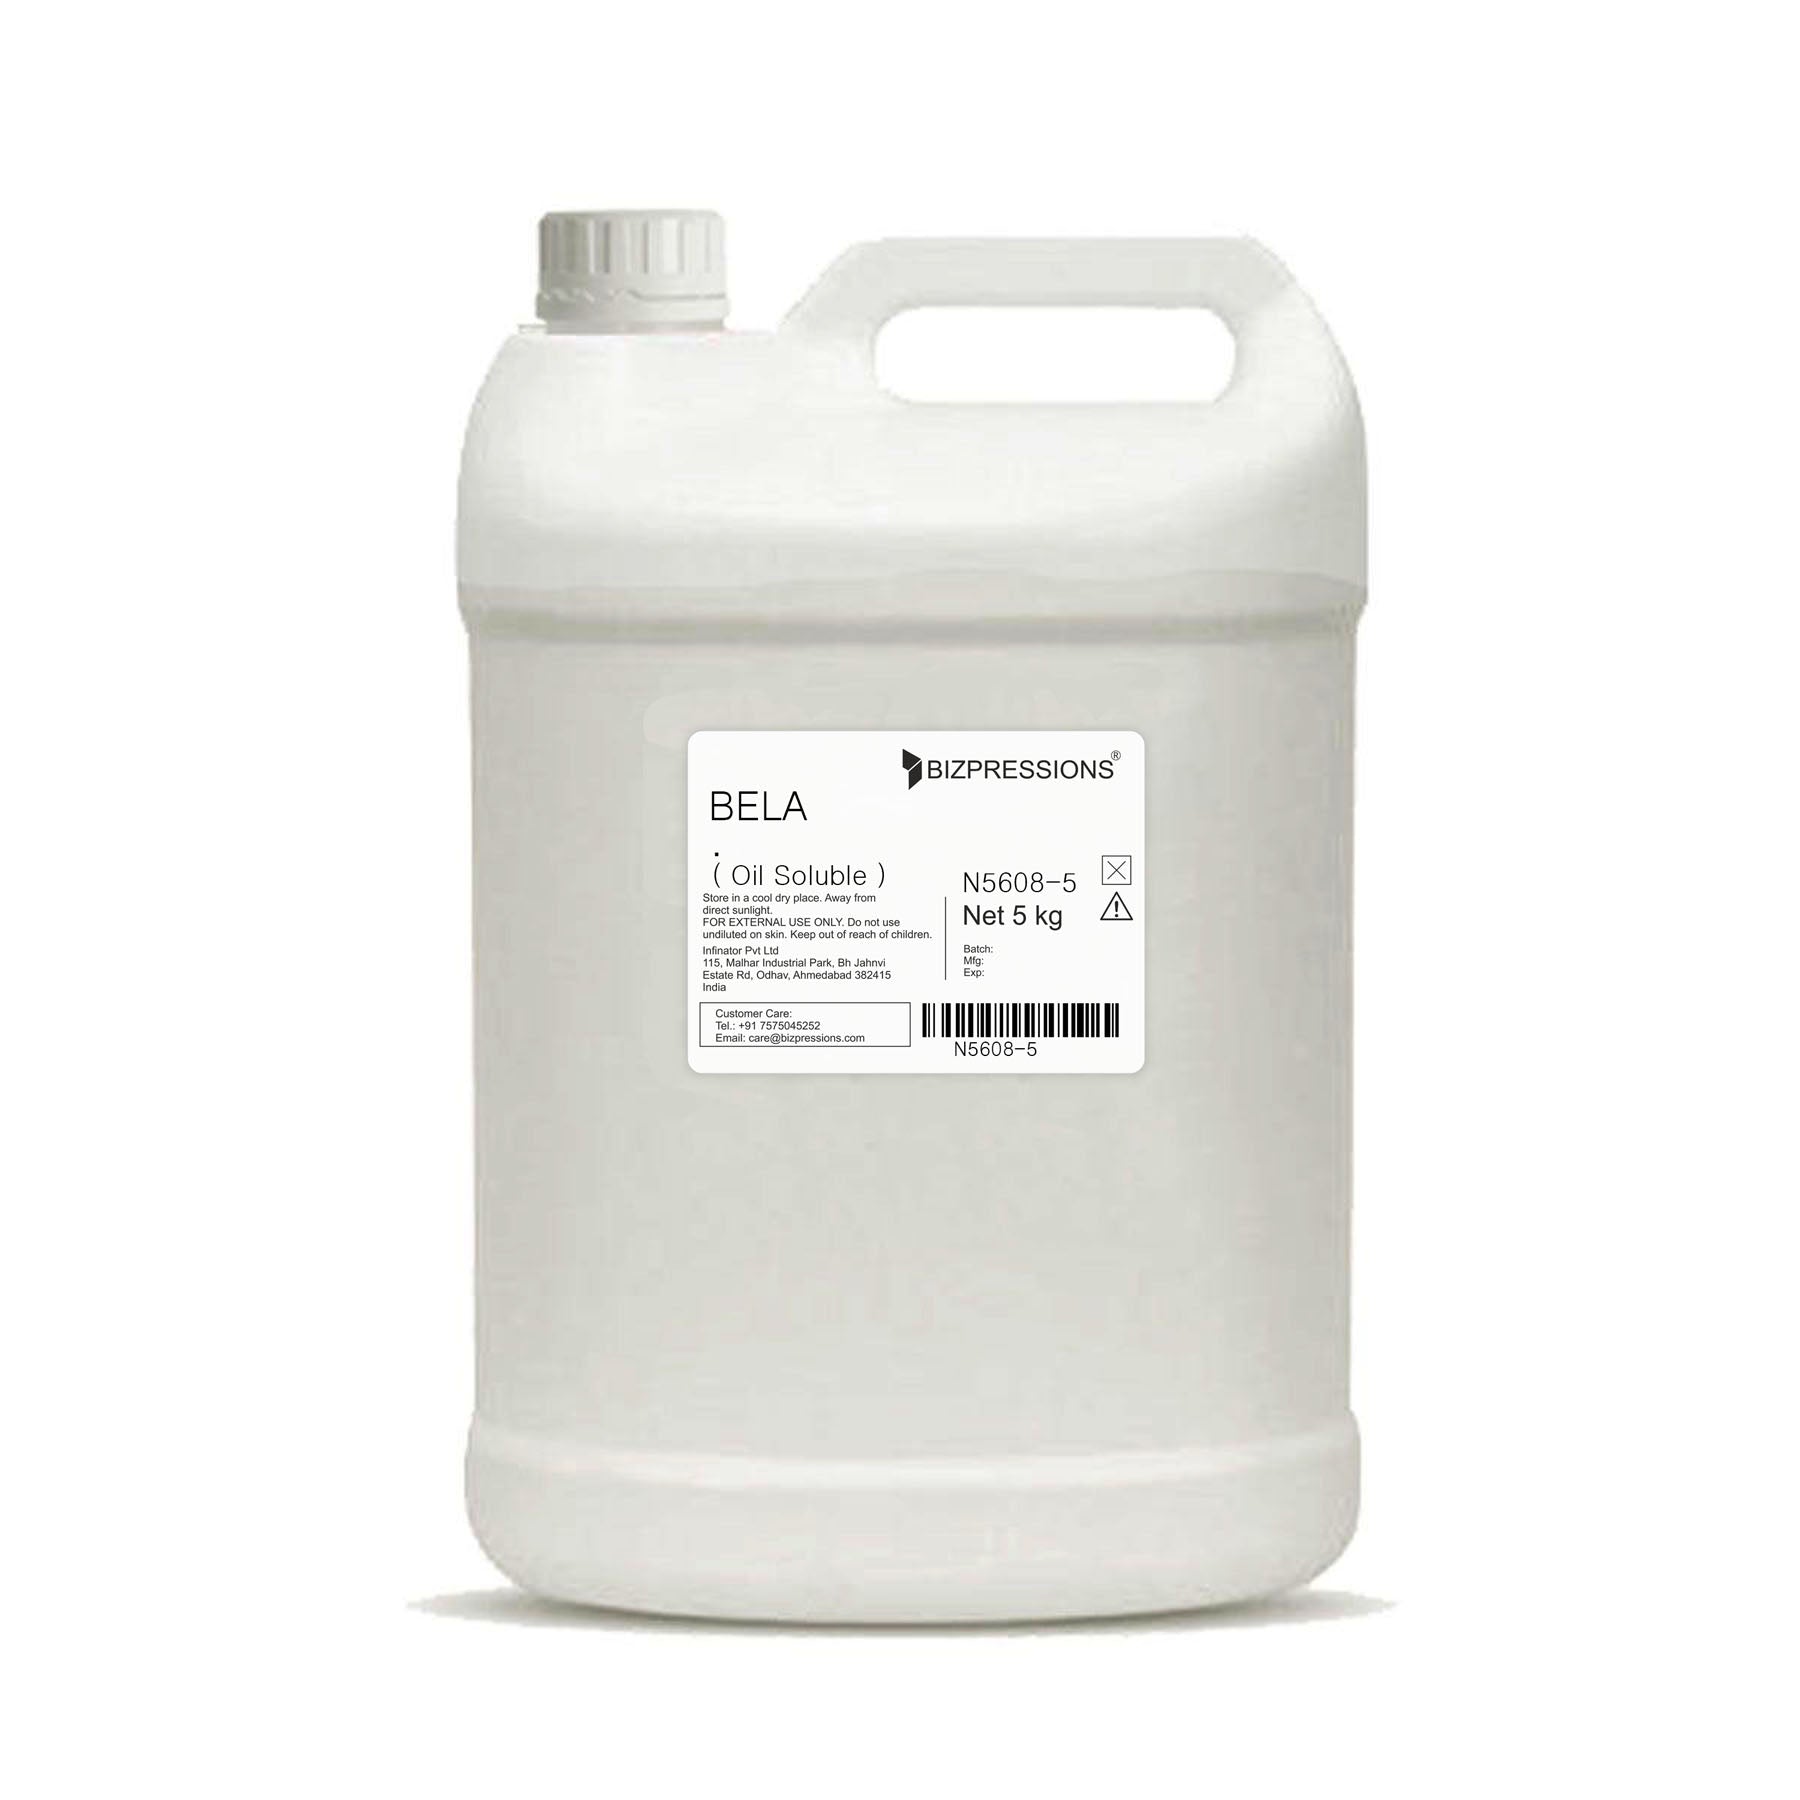 BELA - Fragrance ( Oil Soluble ) - 5 kg